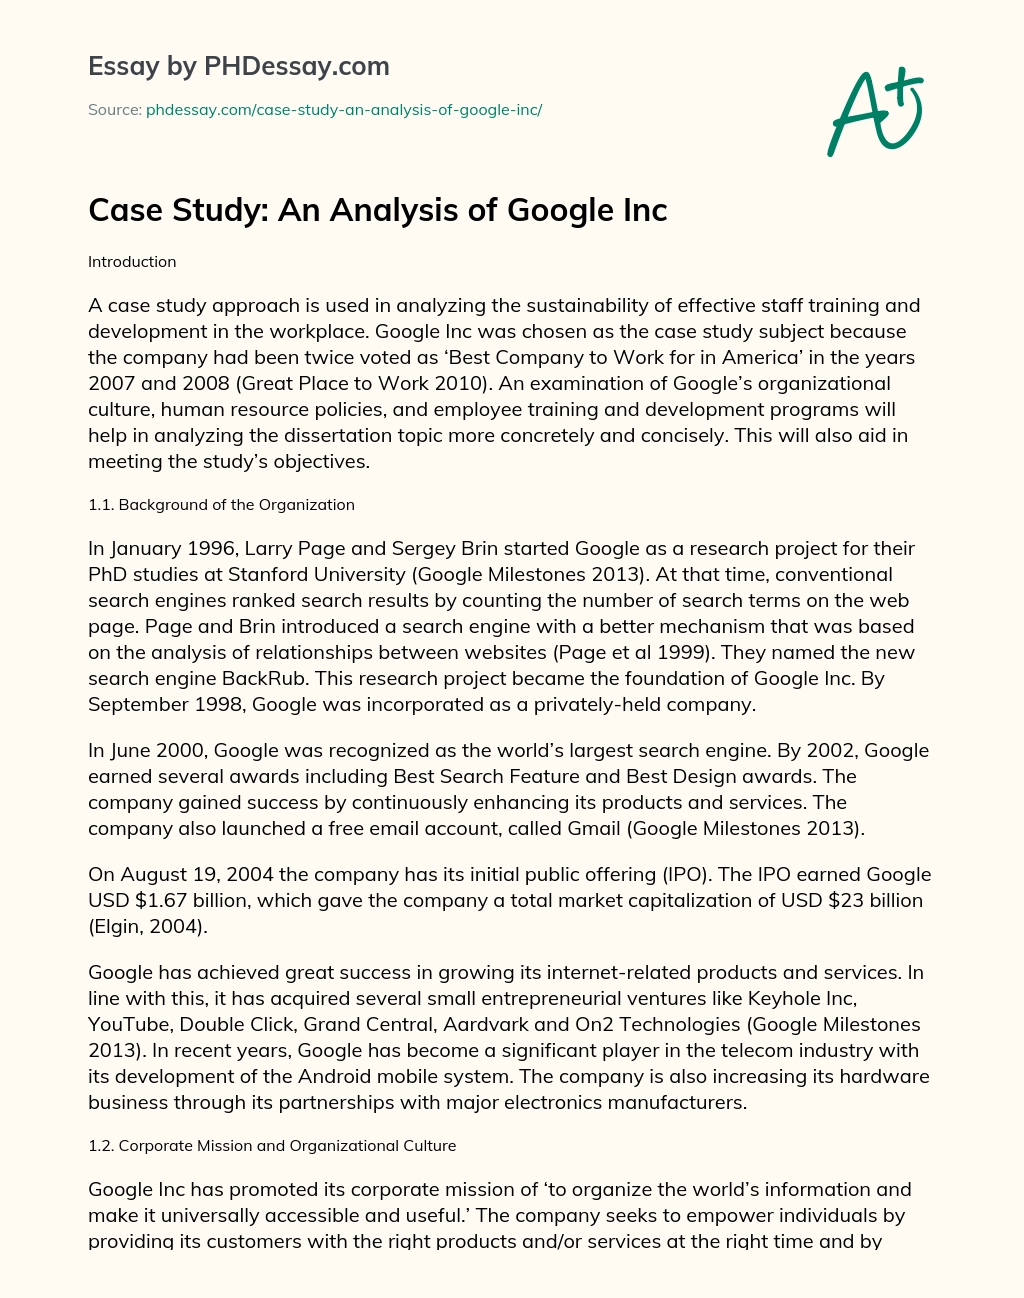 Case Study: An Analysis of Google Inc essay